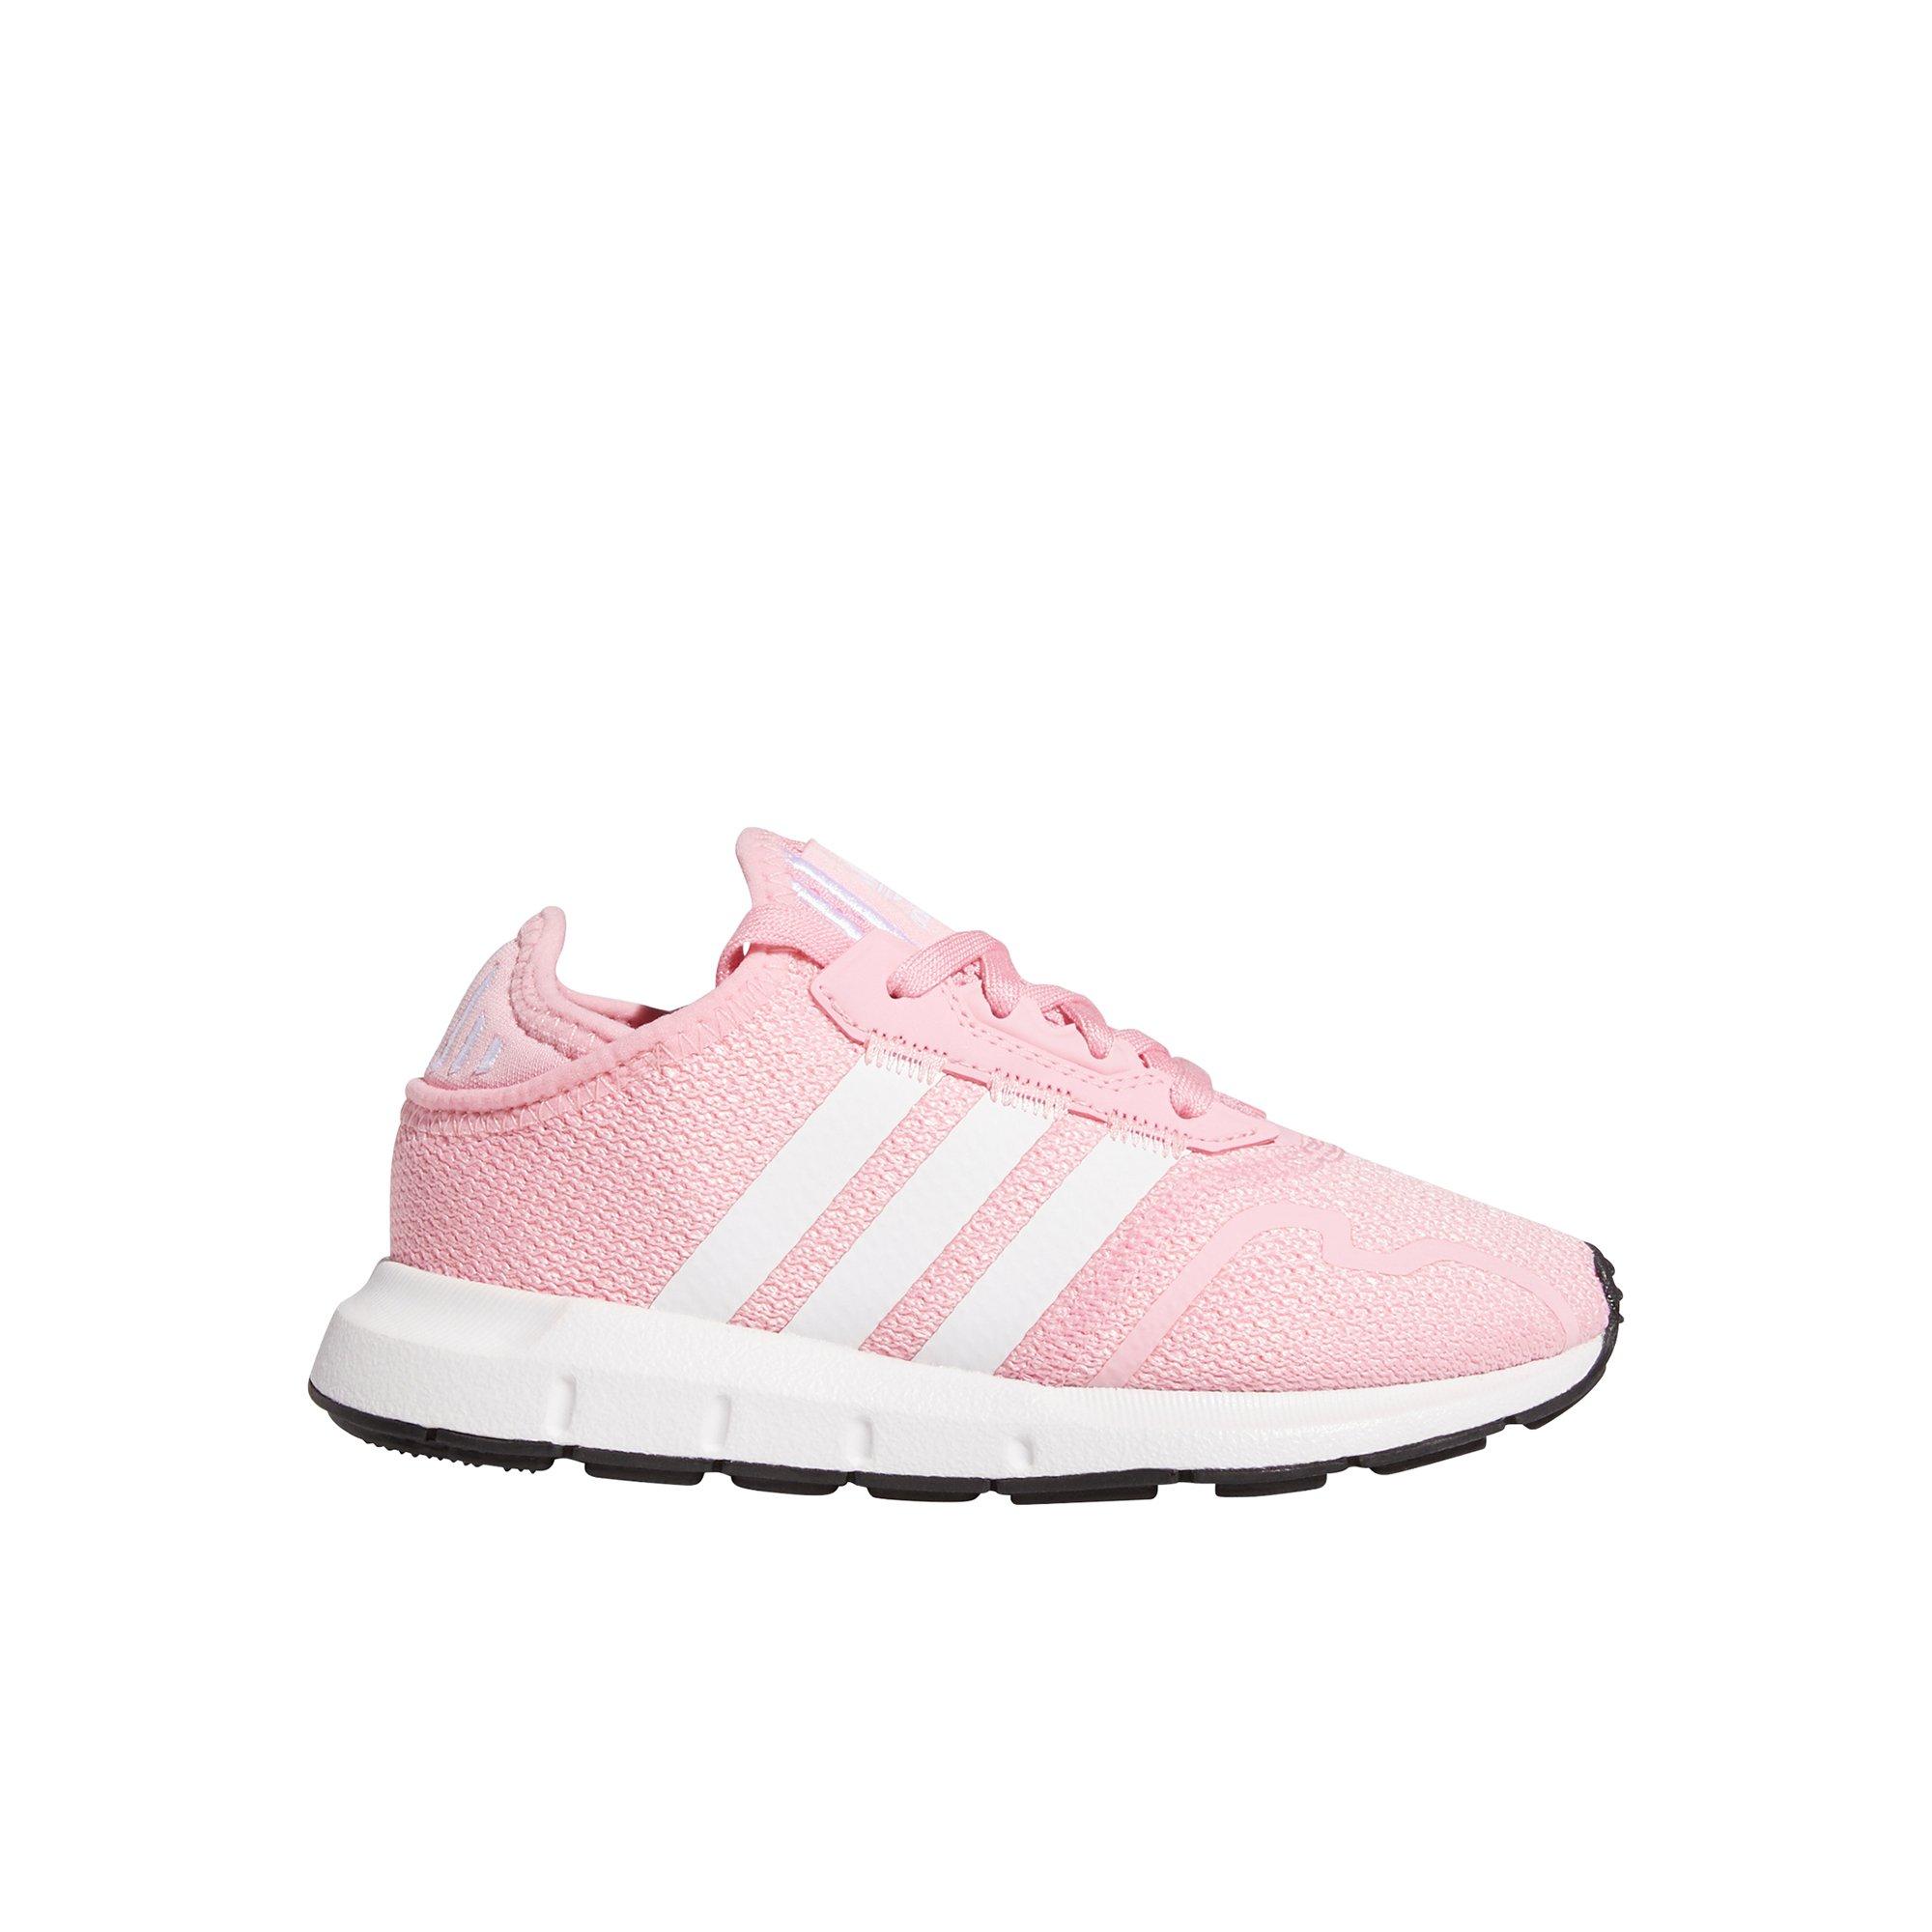 adidas swift run pink